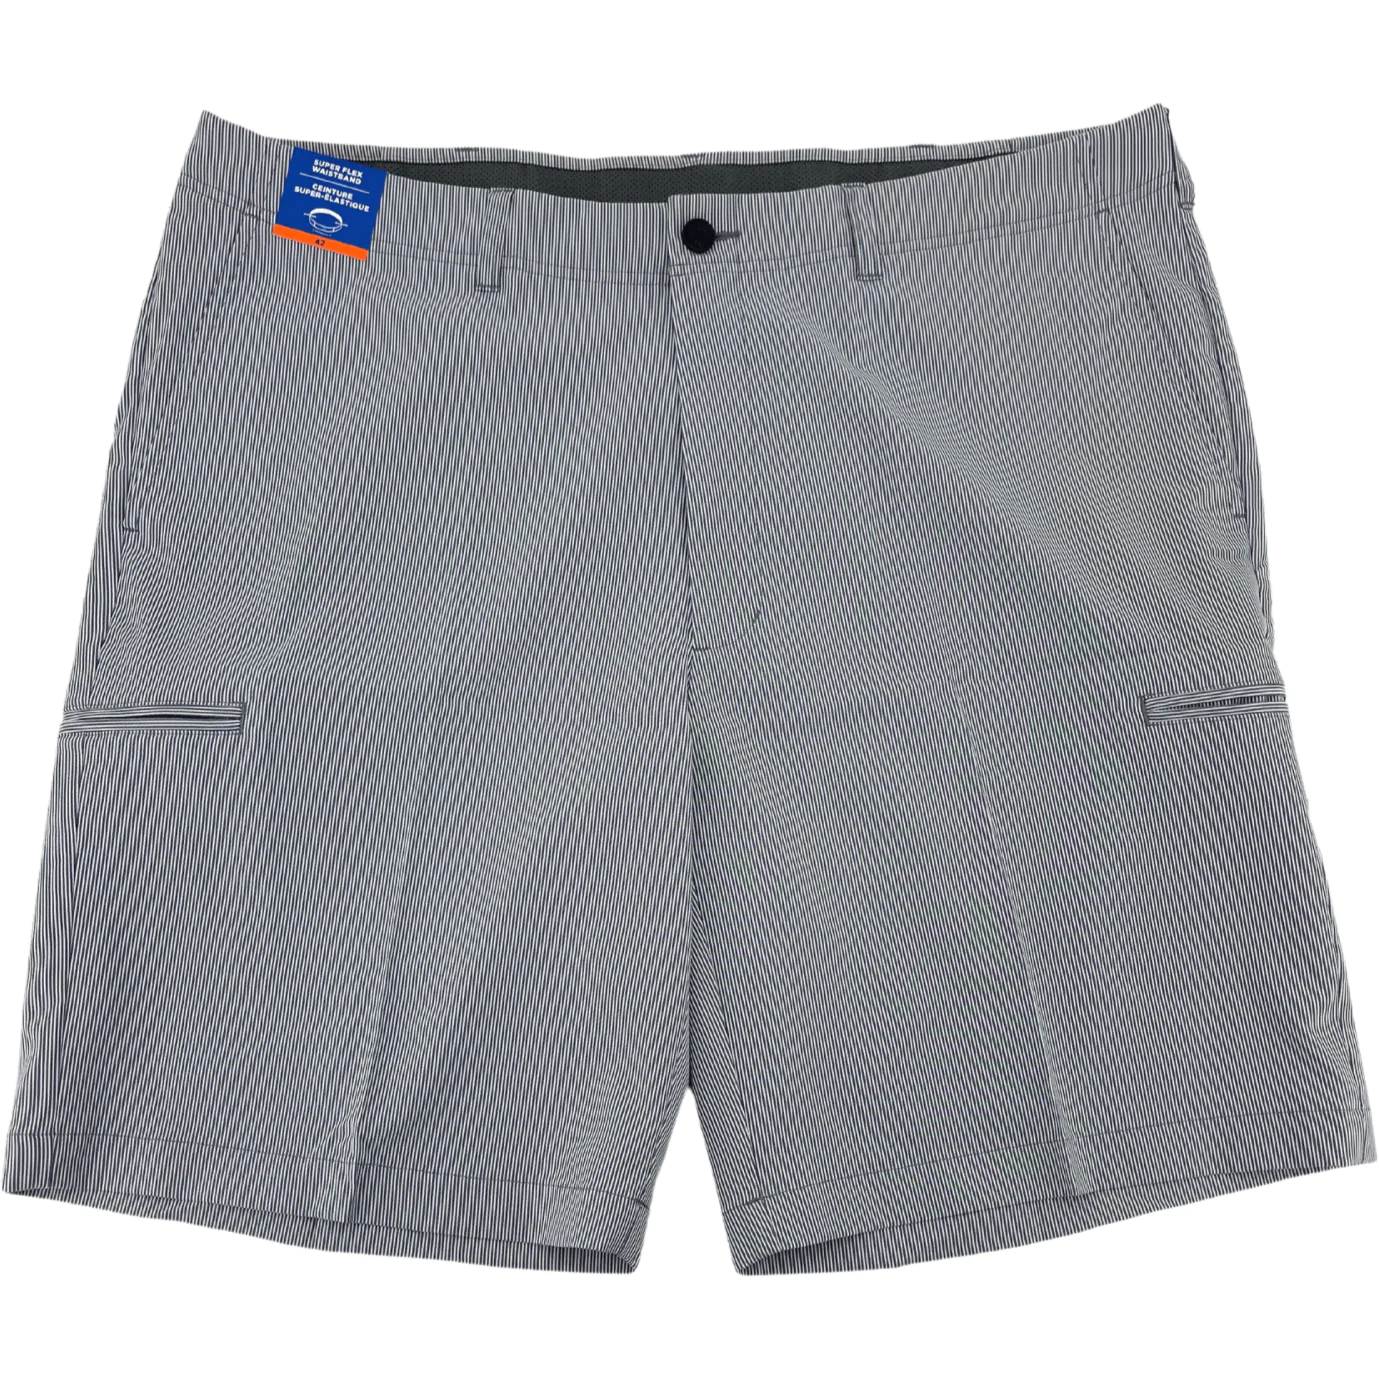 Haggar Men's Shorts / Utility Short / Blue & White Pinstripes / Size 42